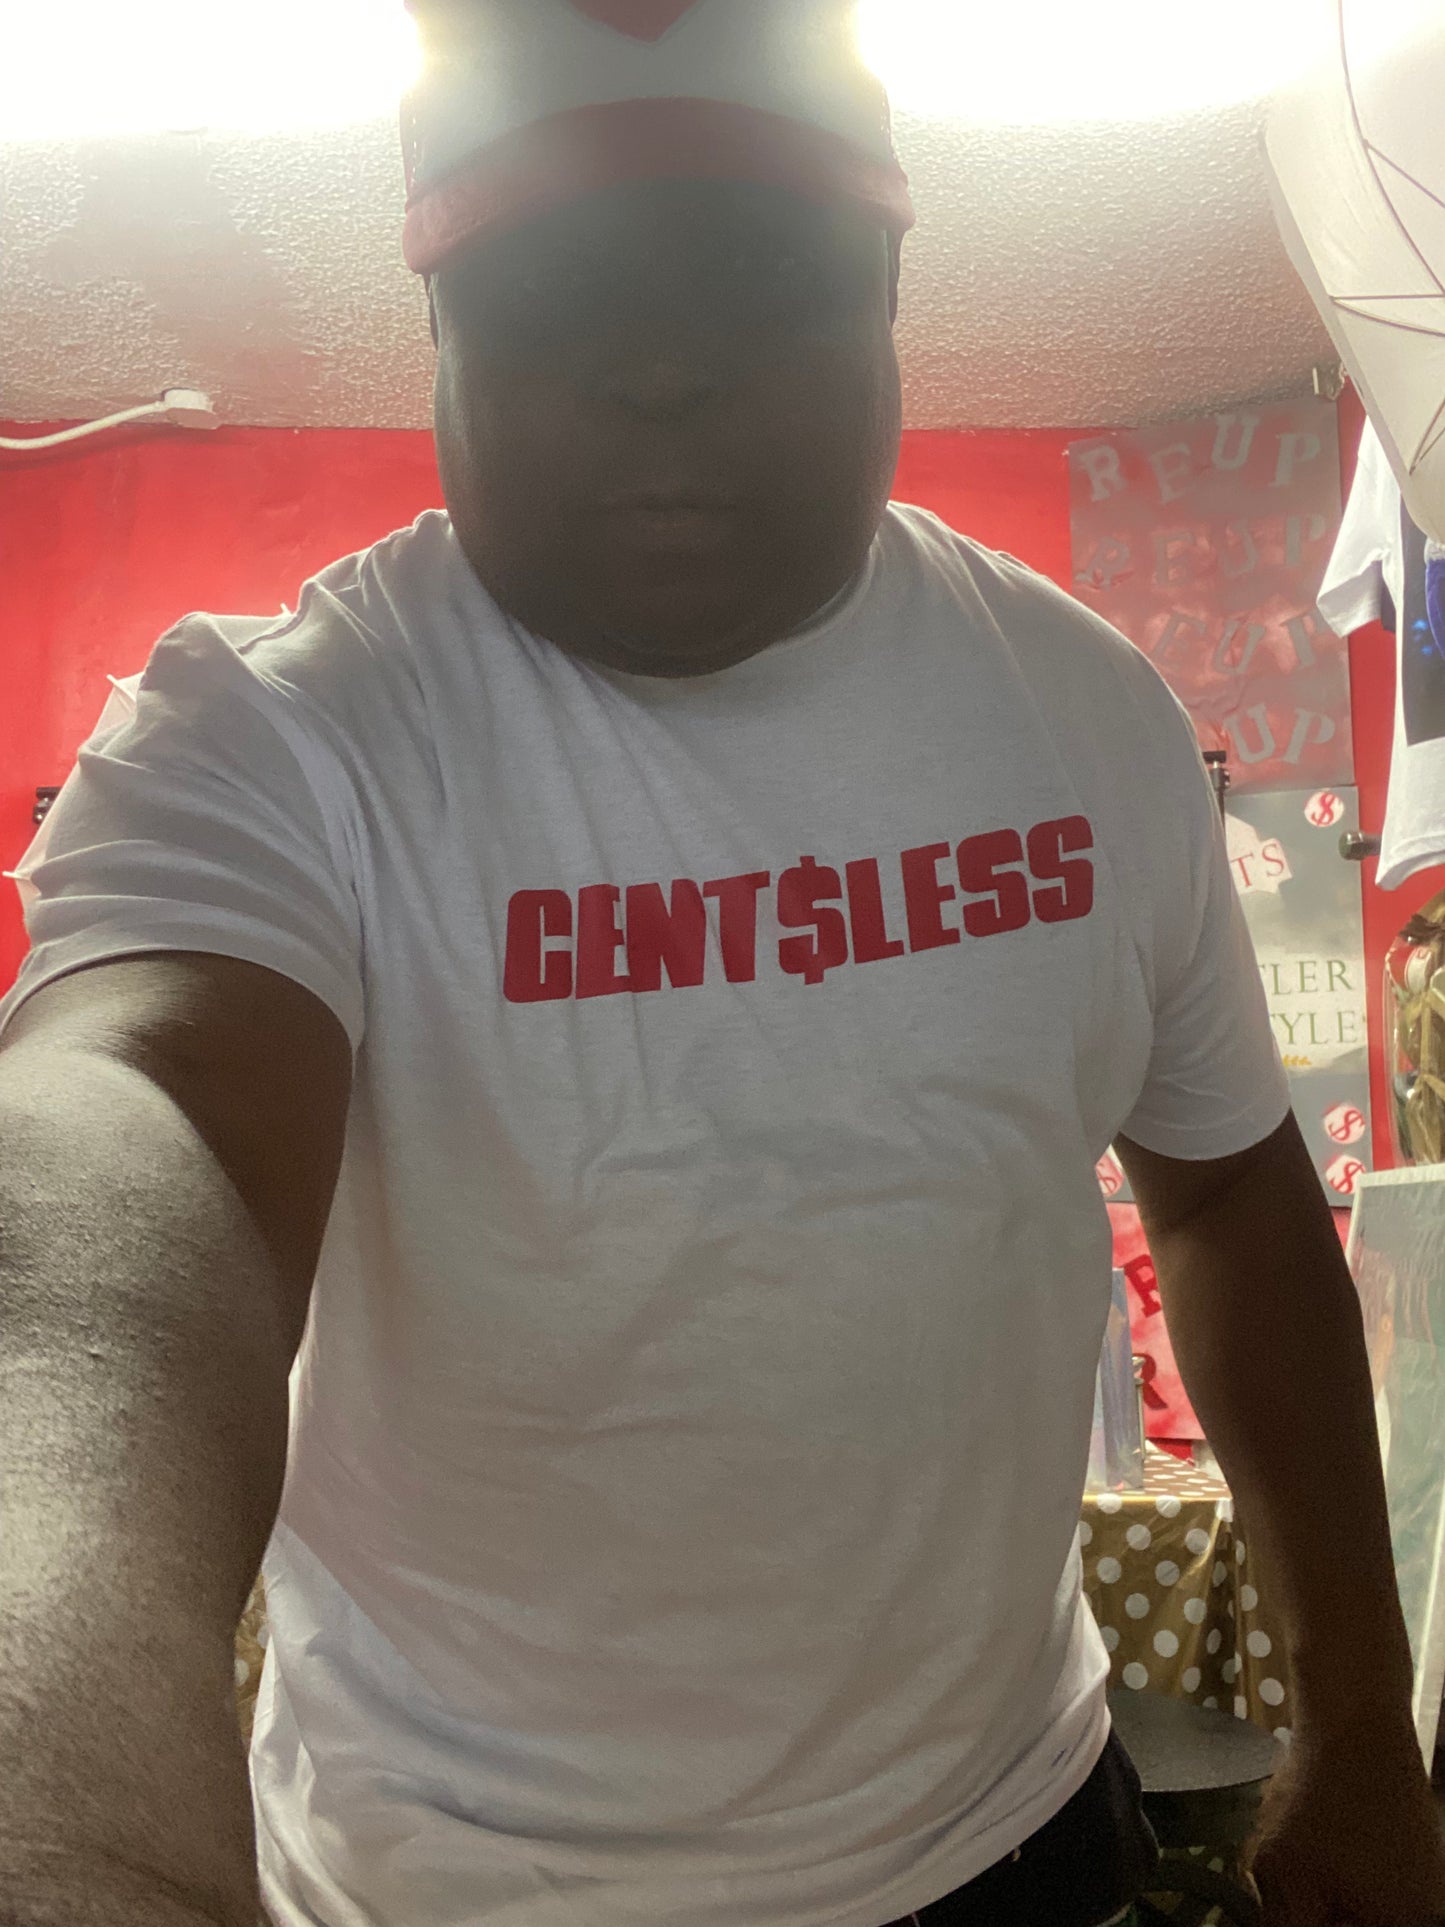 CentsLess white t-shirt